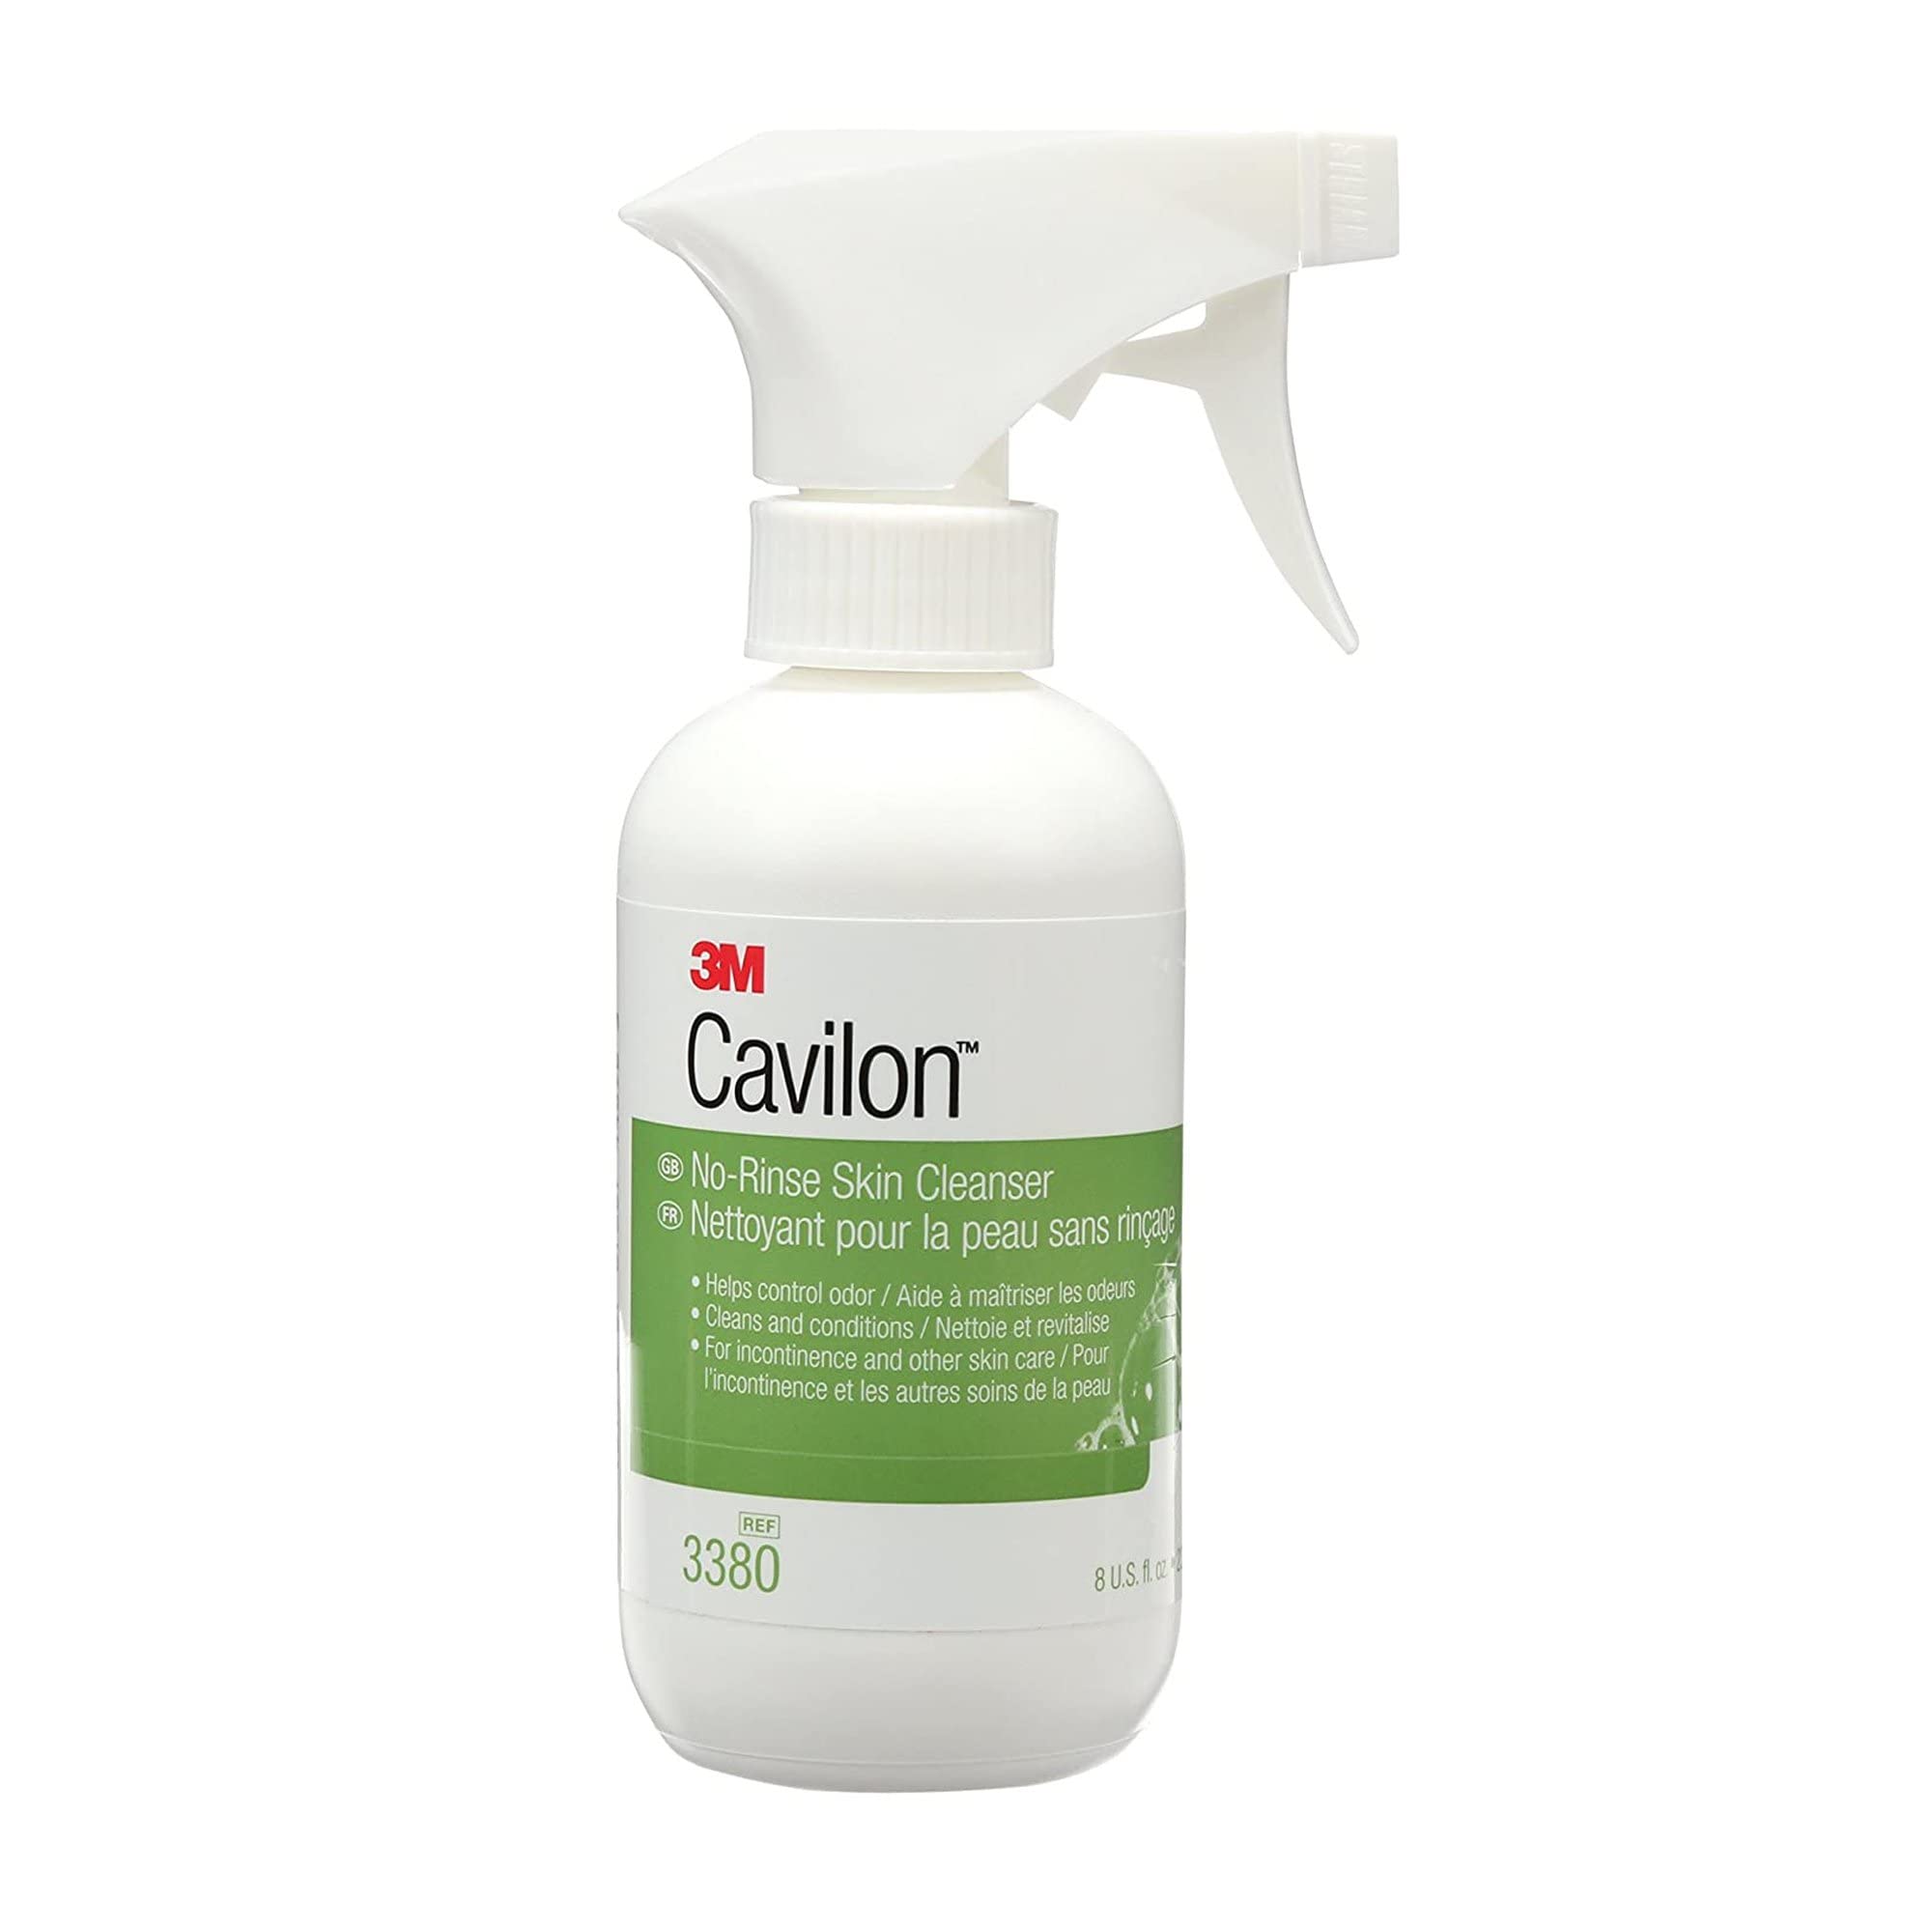 3M Cavilon Skin Cleanser, 8 Oz Bottle (883380) Category: Skin Care